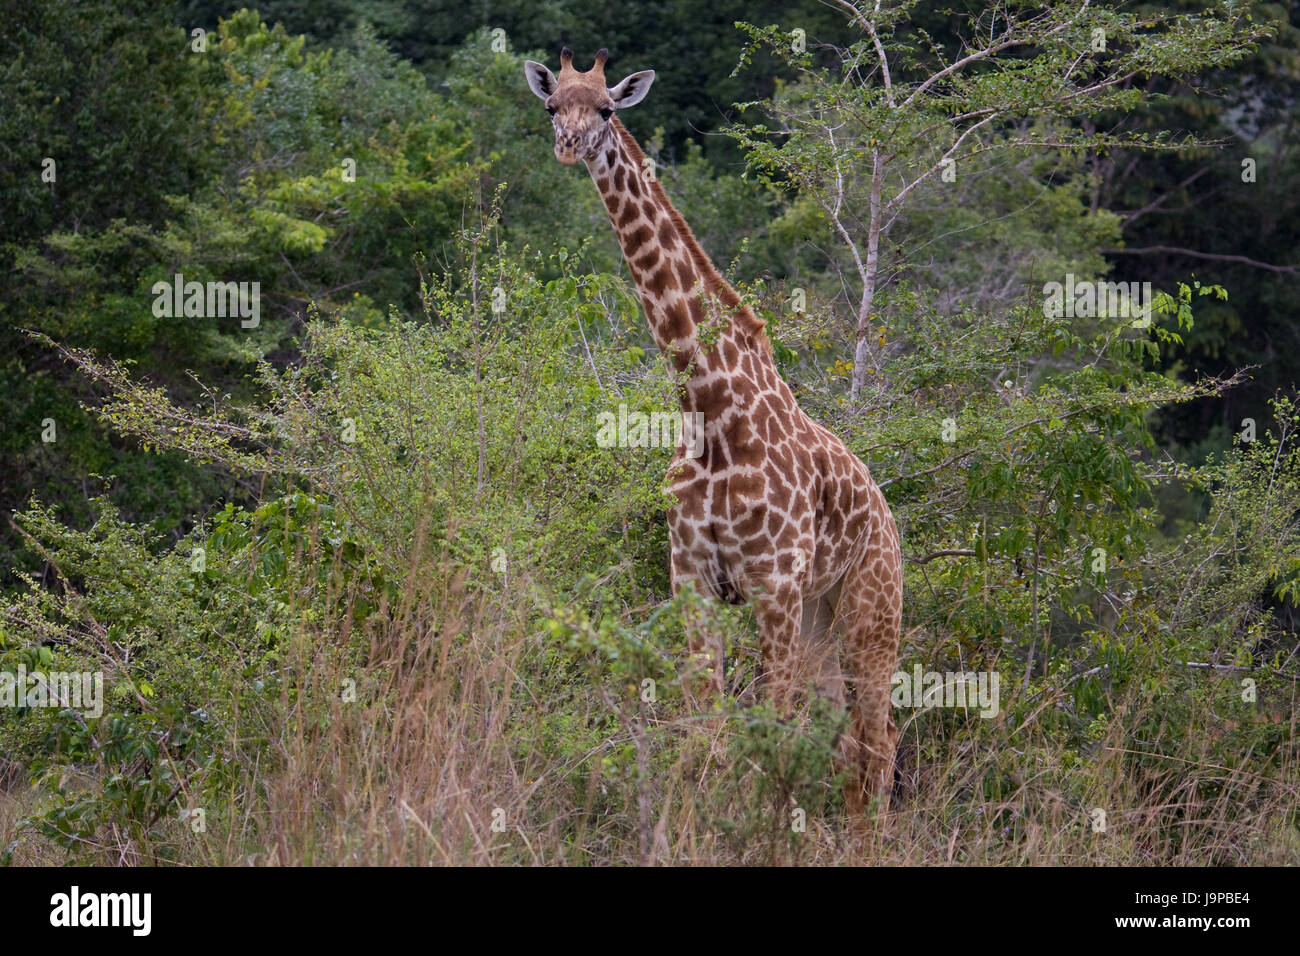 national park, africa, kenya, wildlife, safari, giraffe, tanzania, tsavo, Stock Photo